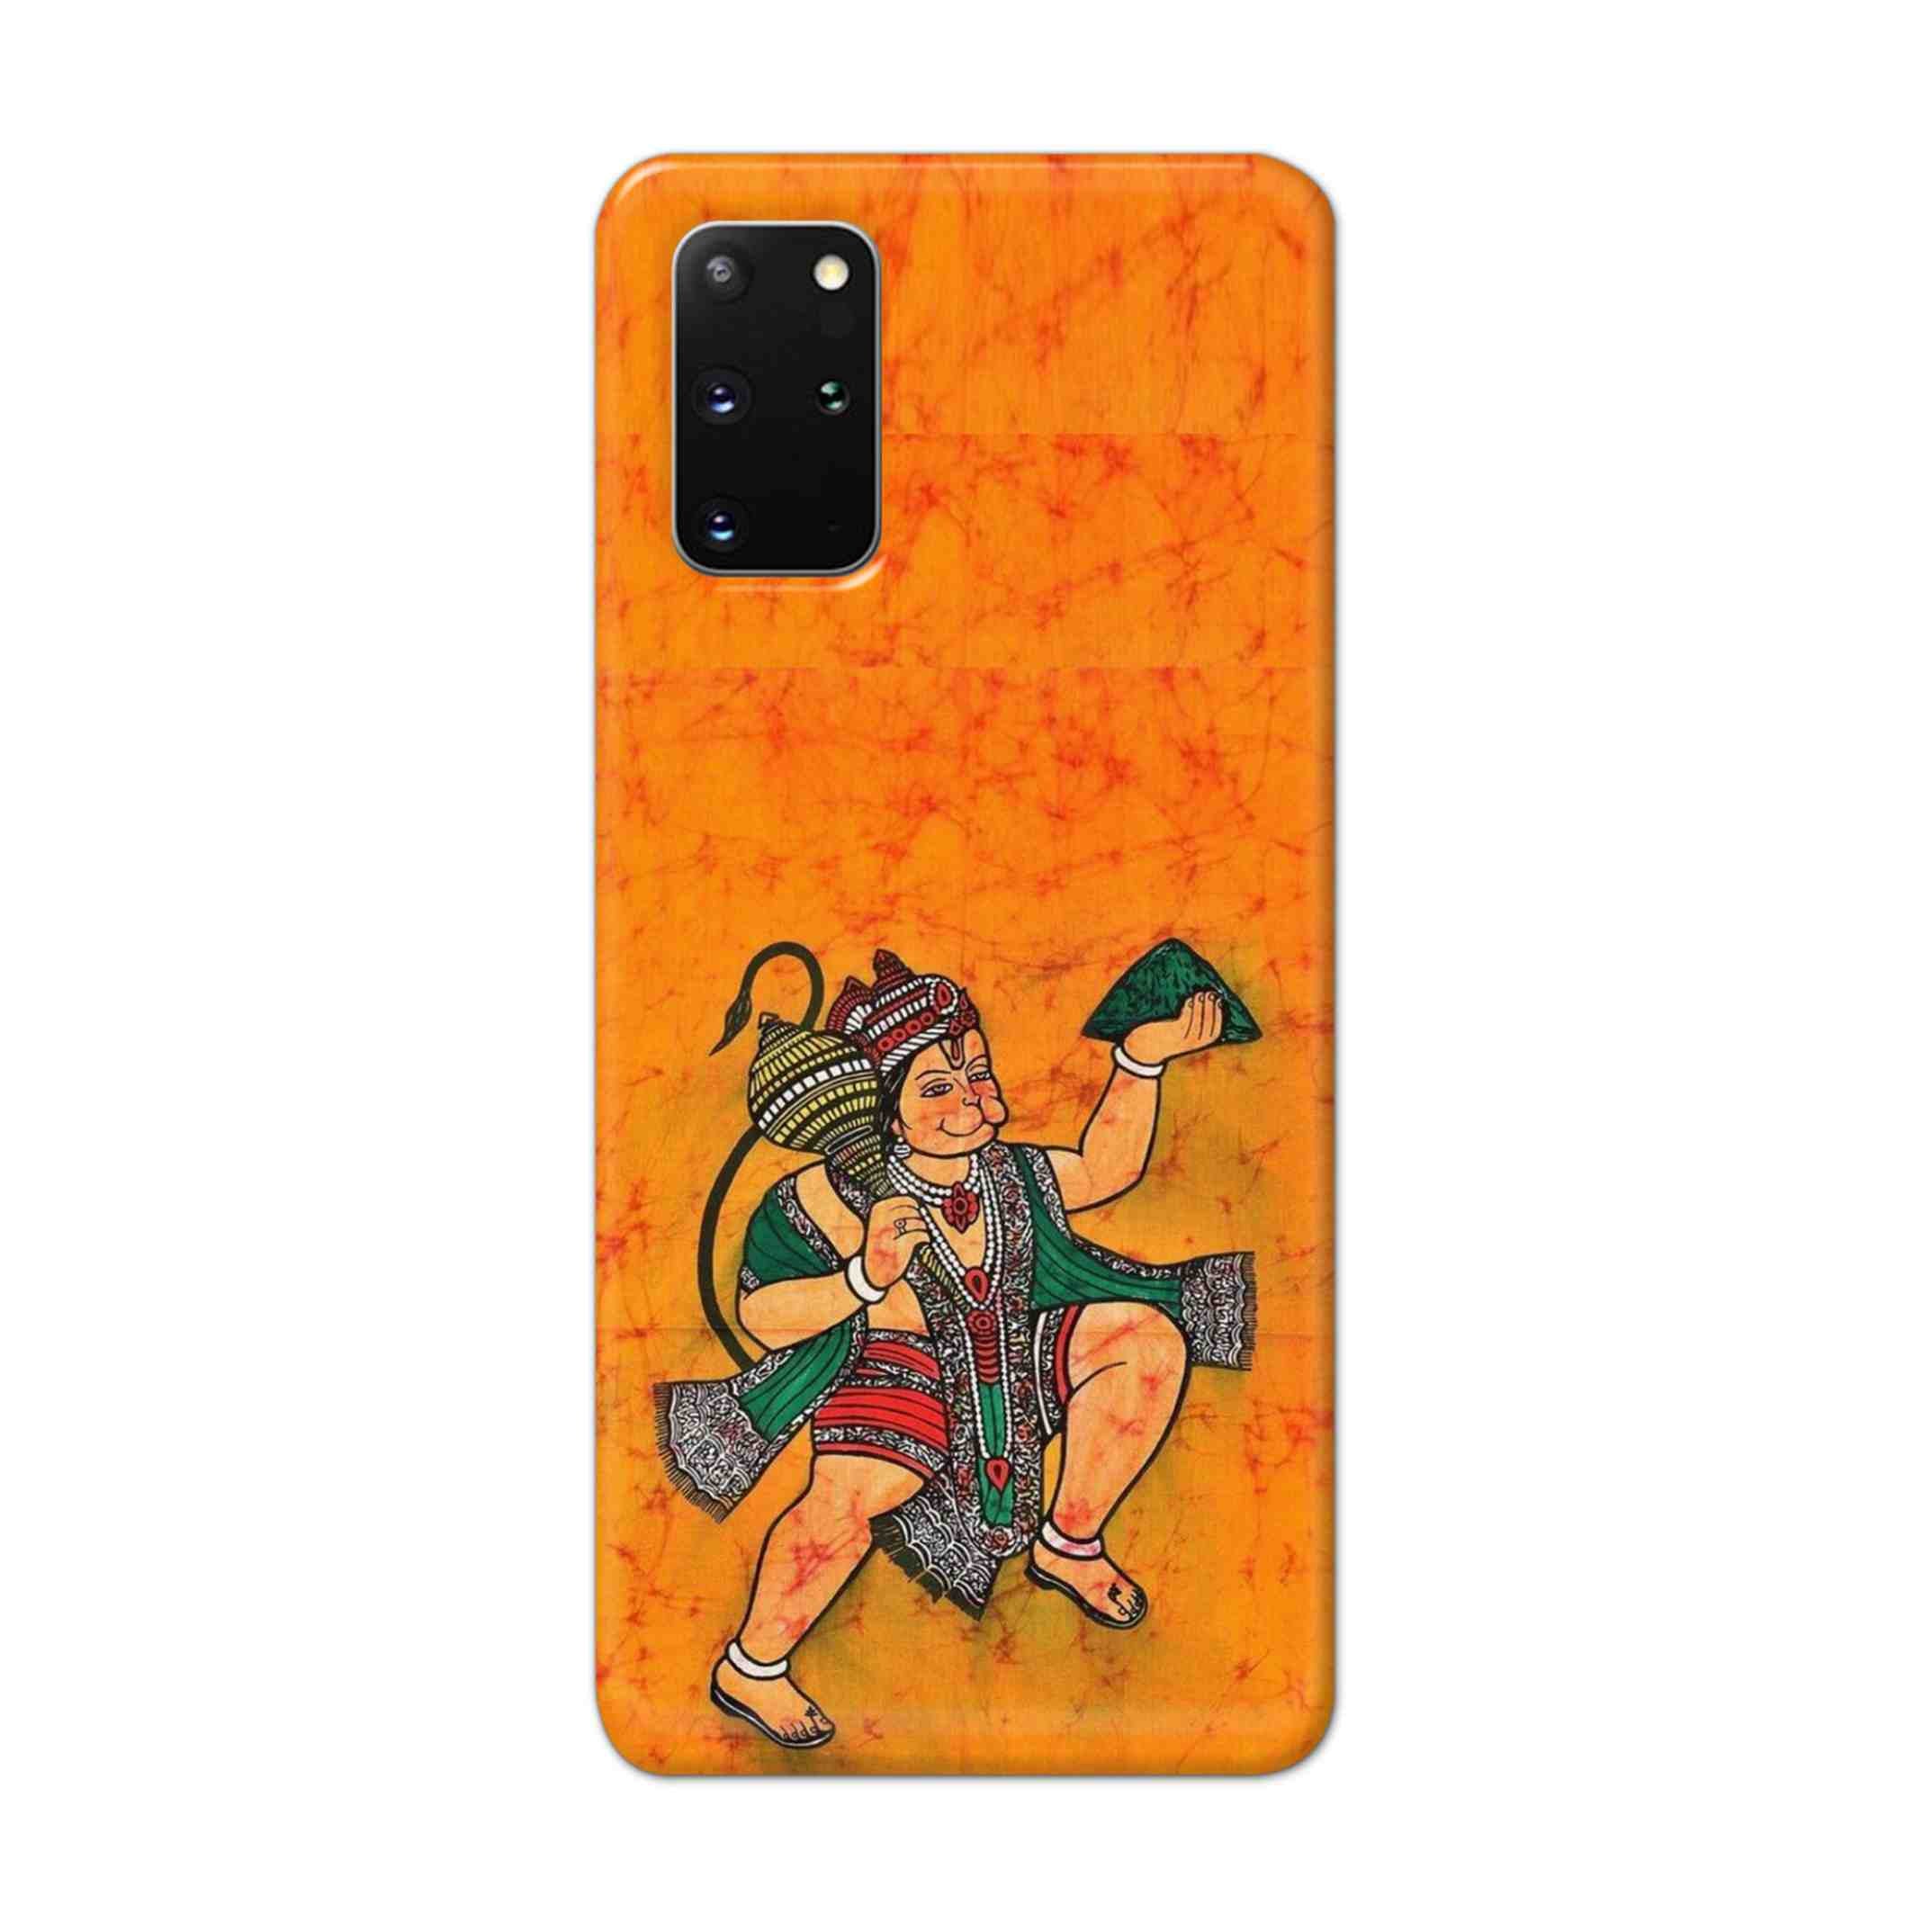 Buy Hanuman Ji Hard Back Mobile Phone Case Cover For Samsung Galaxy S20 Plus Online